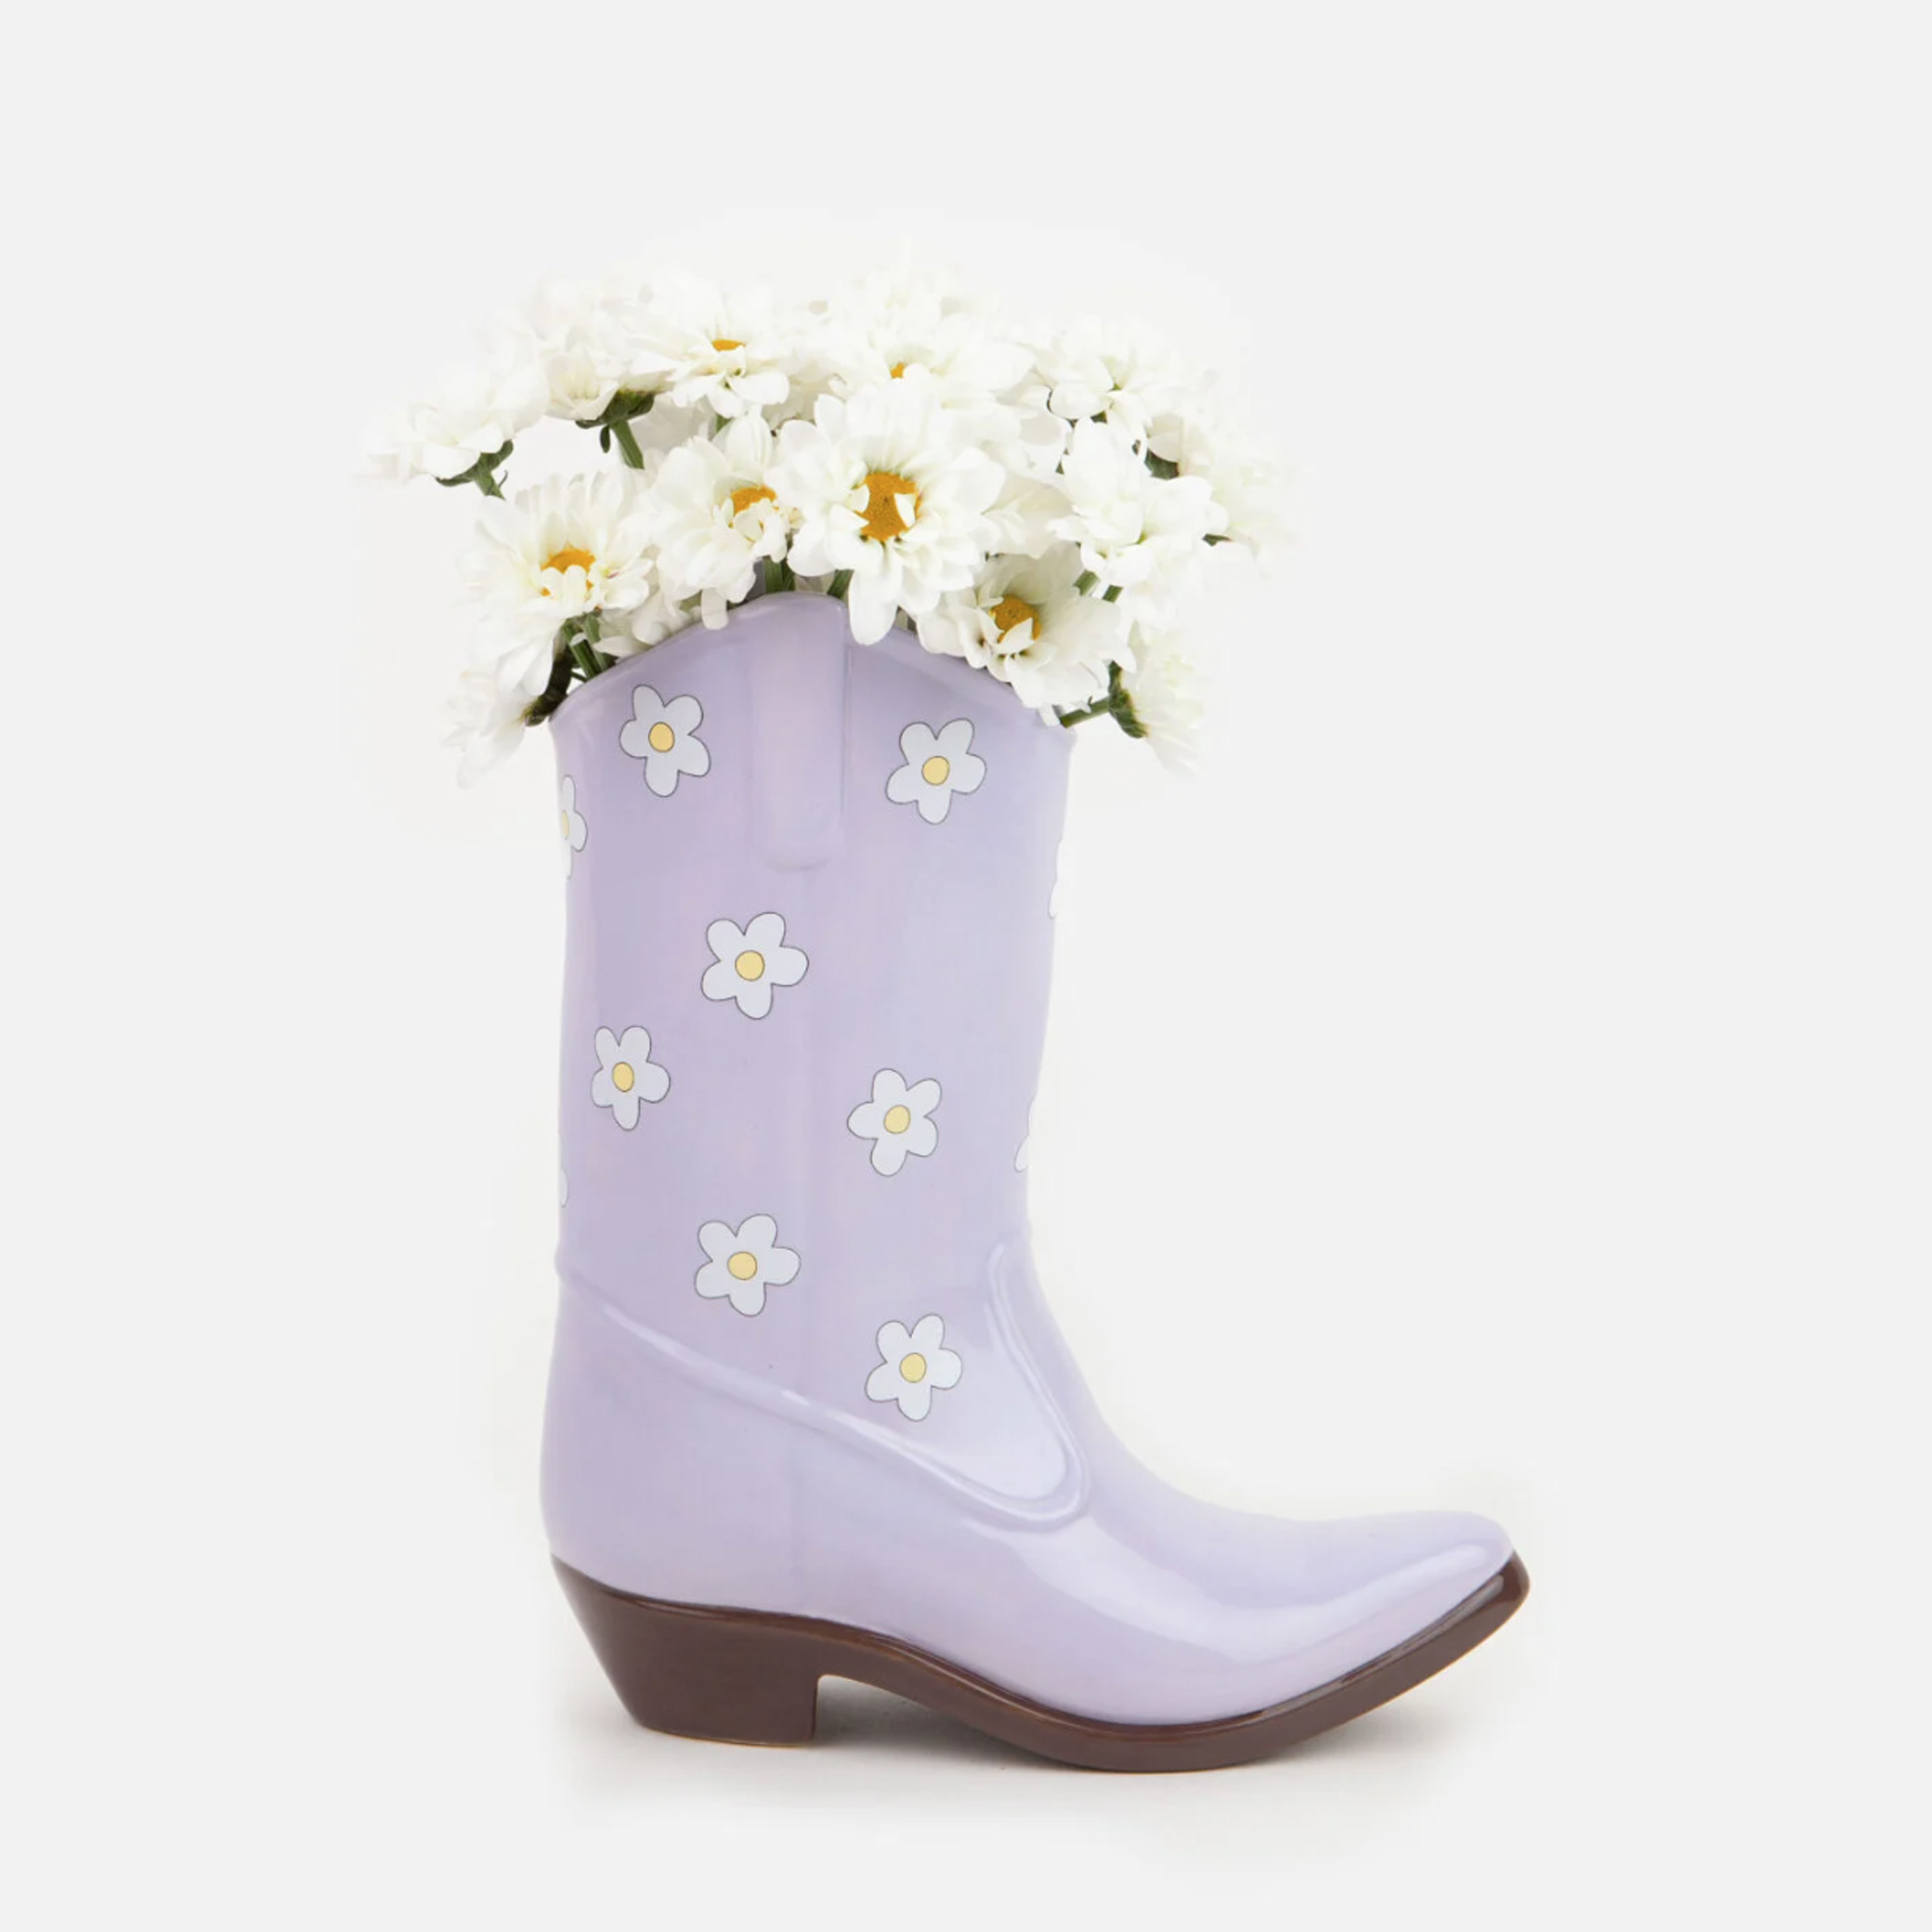 DOIY Design Cowboy Boot Vase - Lilac